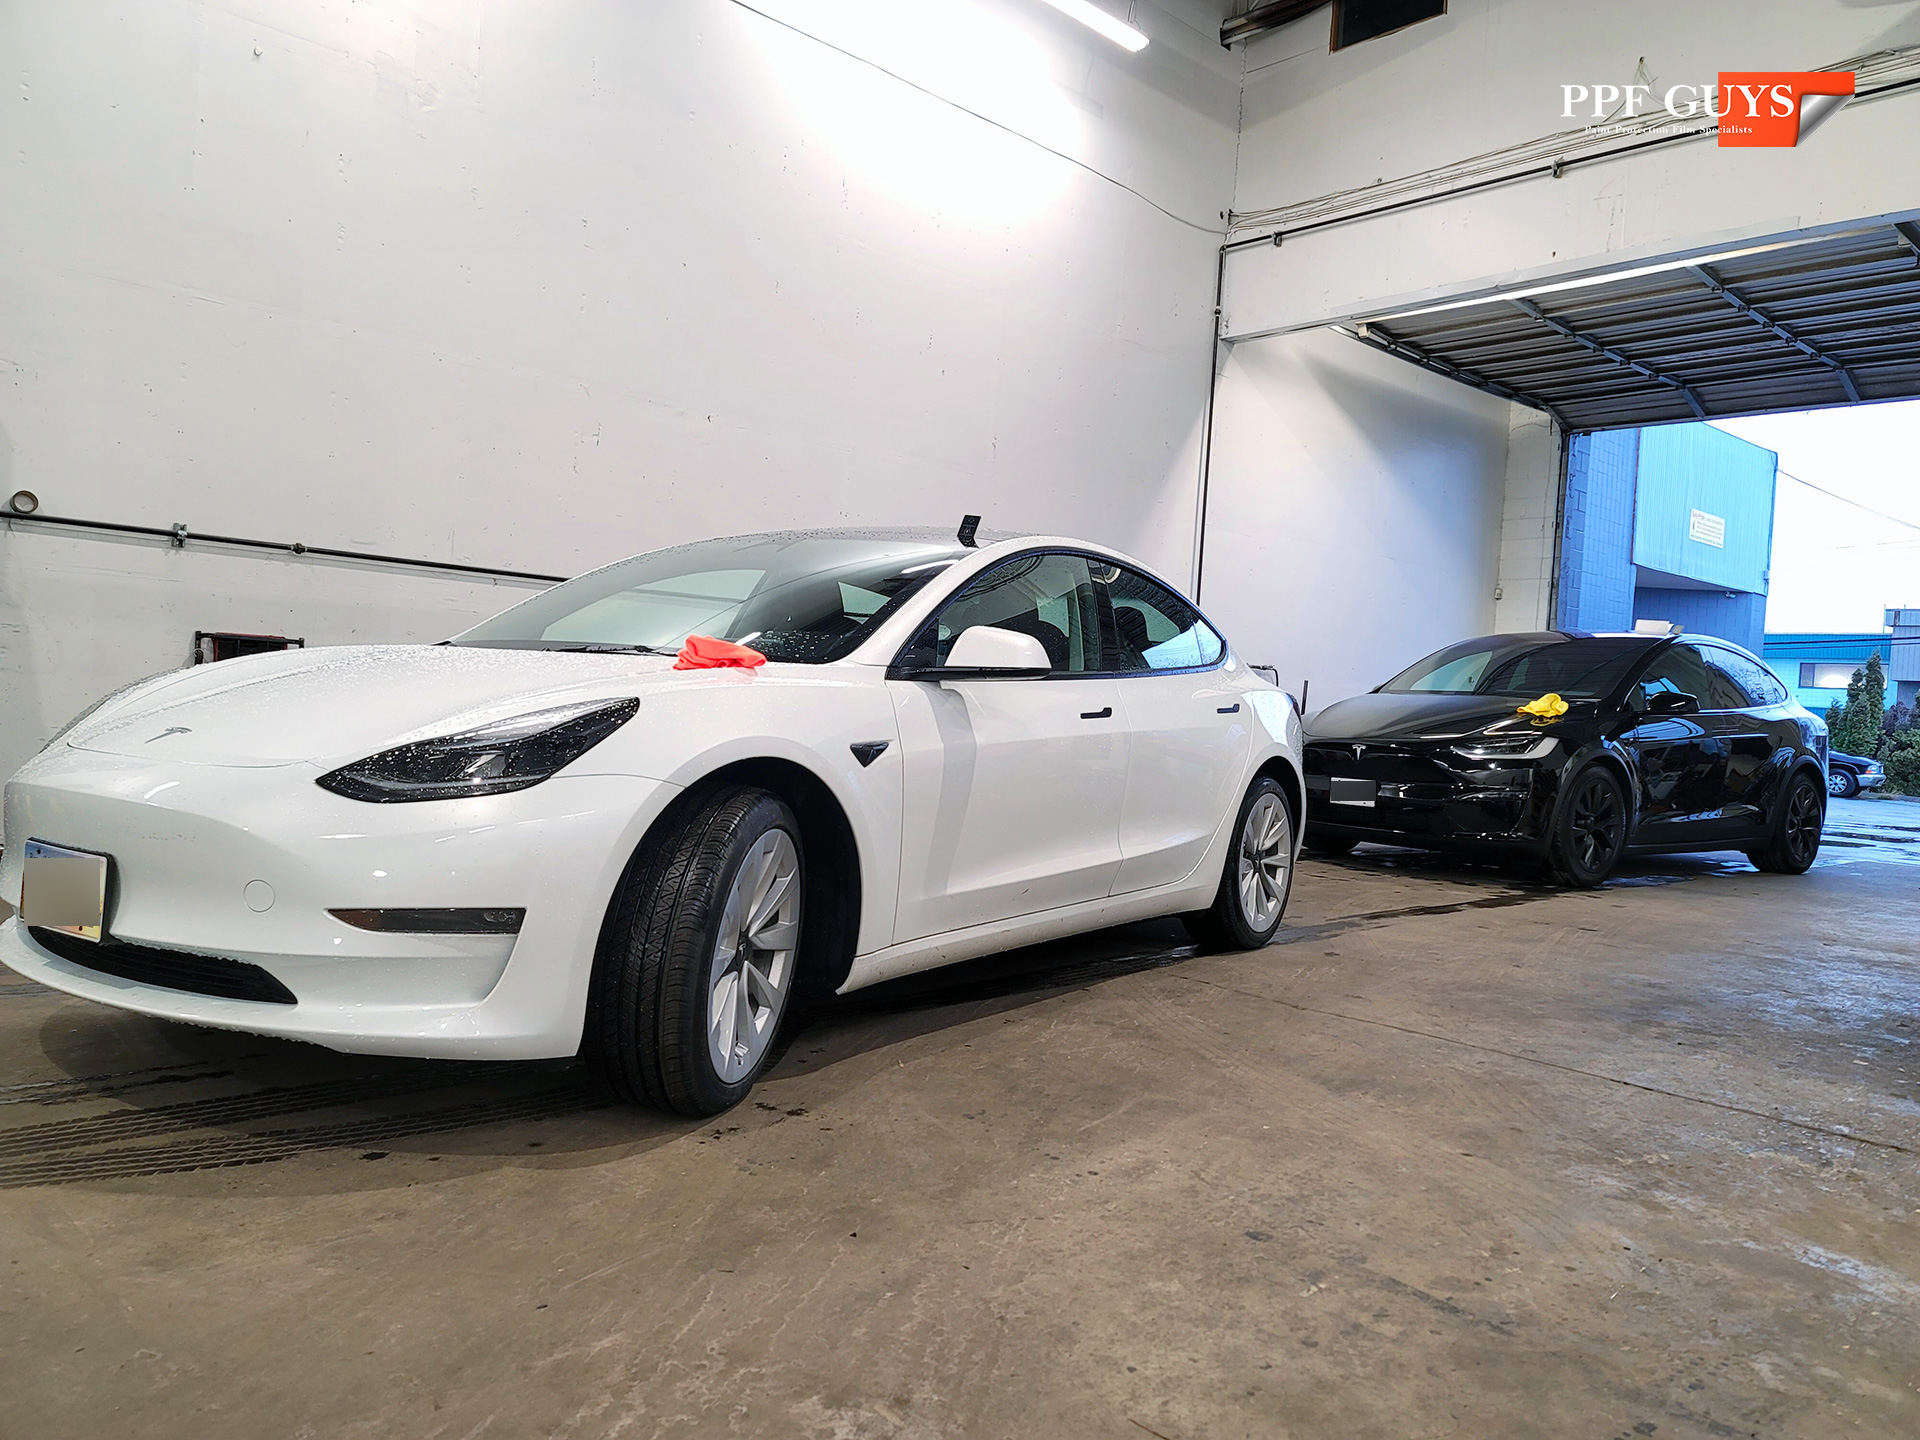 PPF Guys Tesla Model X Black Full Body Xpel Ultimate Fusion PPF (27).jpg